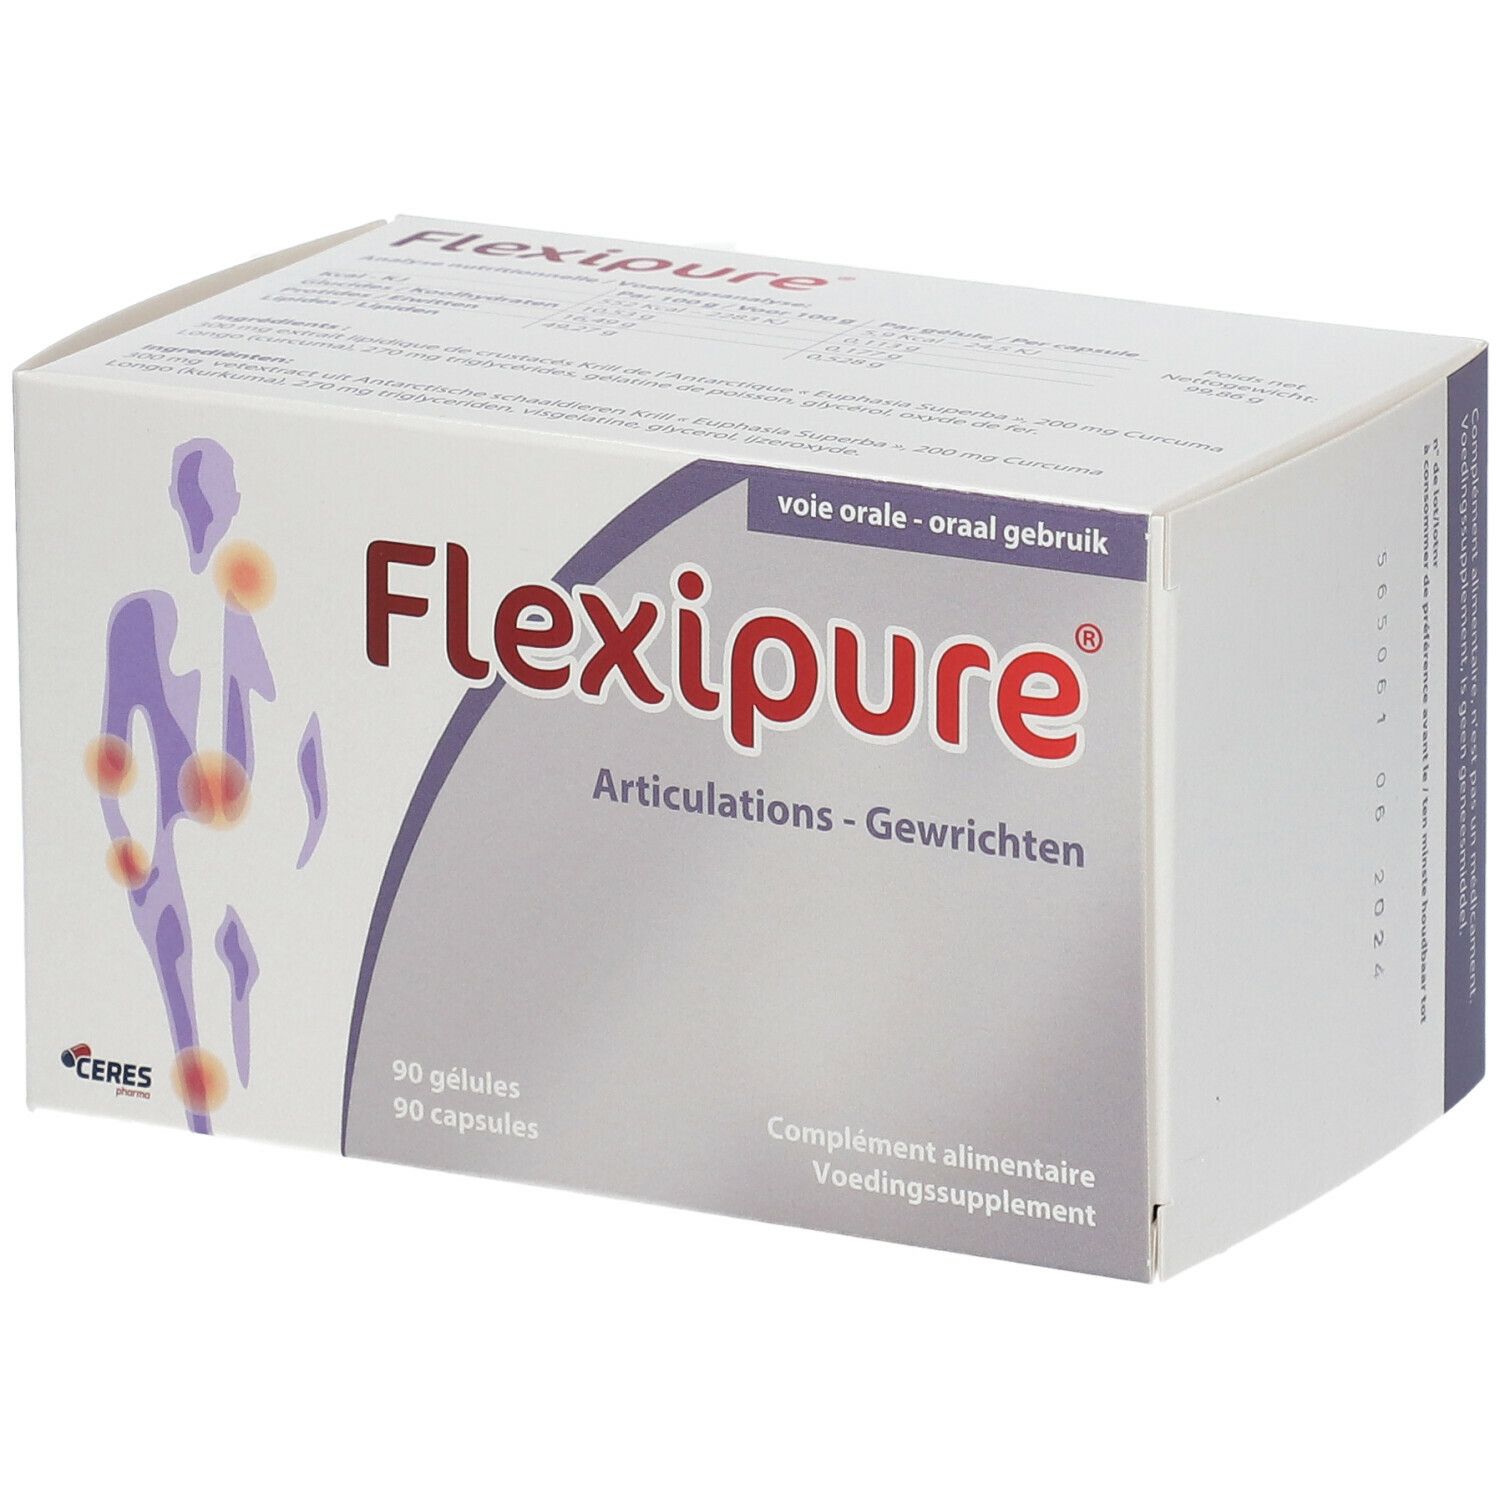 Image of Flexipure